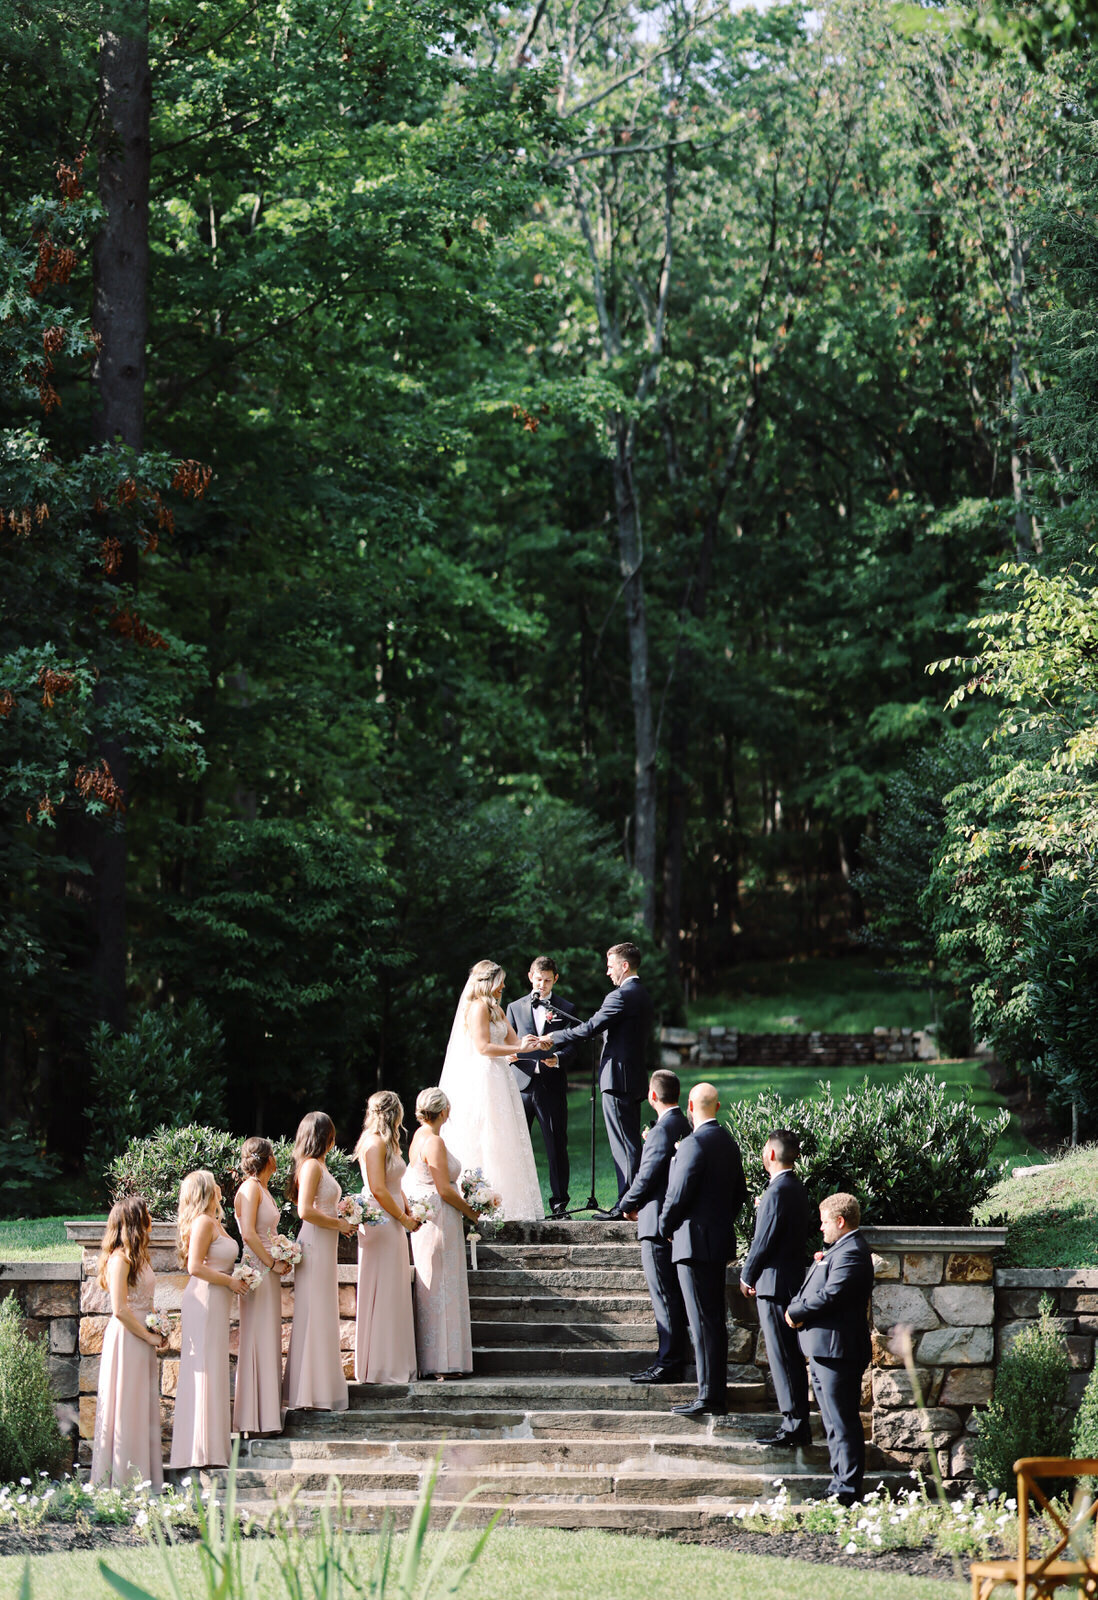 Elegant outdoor summer wedding photography at a historic Maryland wedding venue.